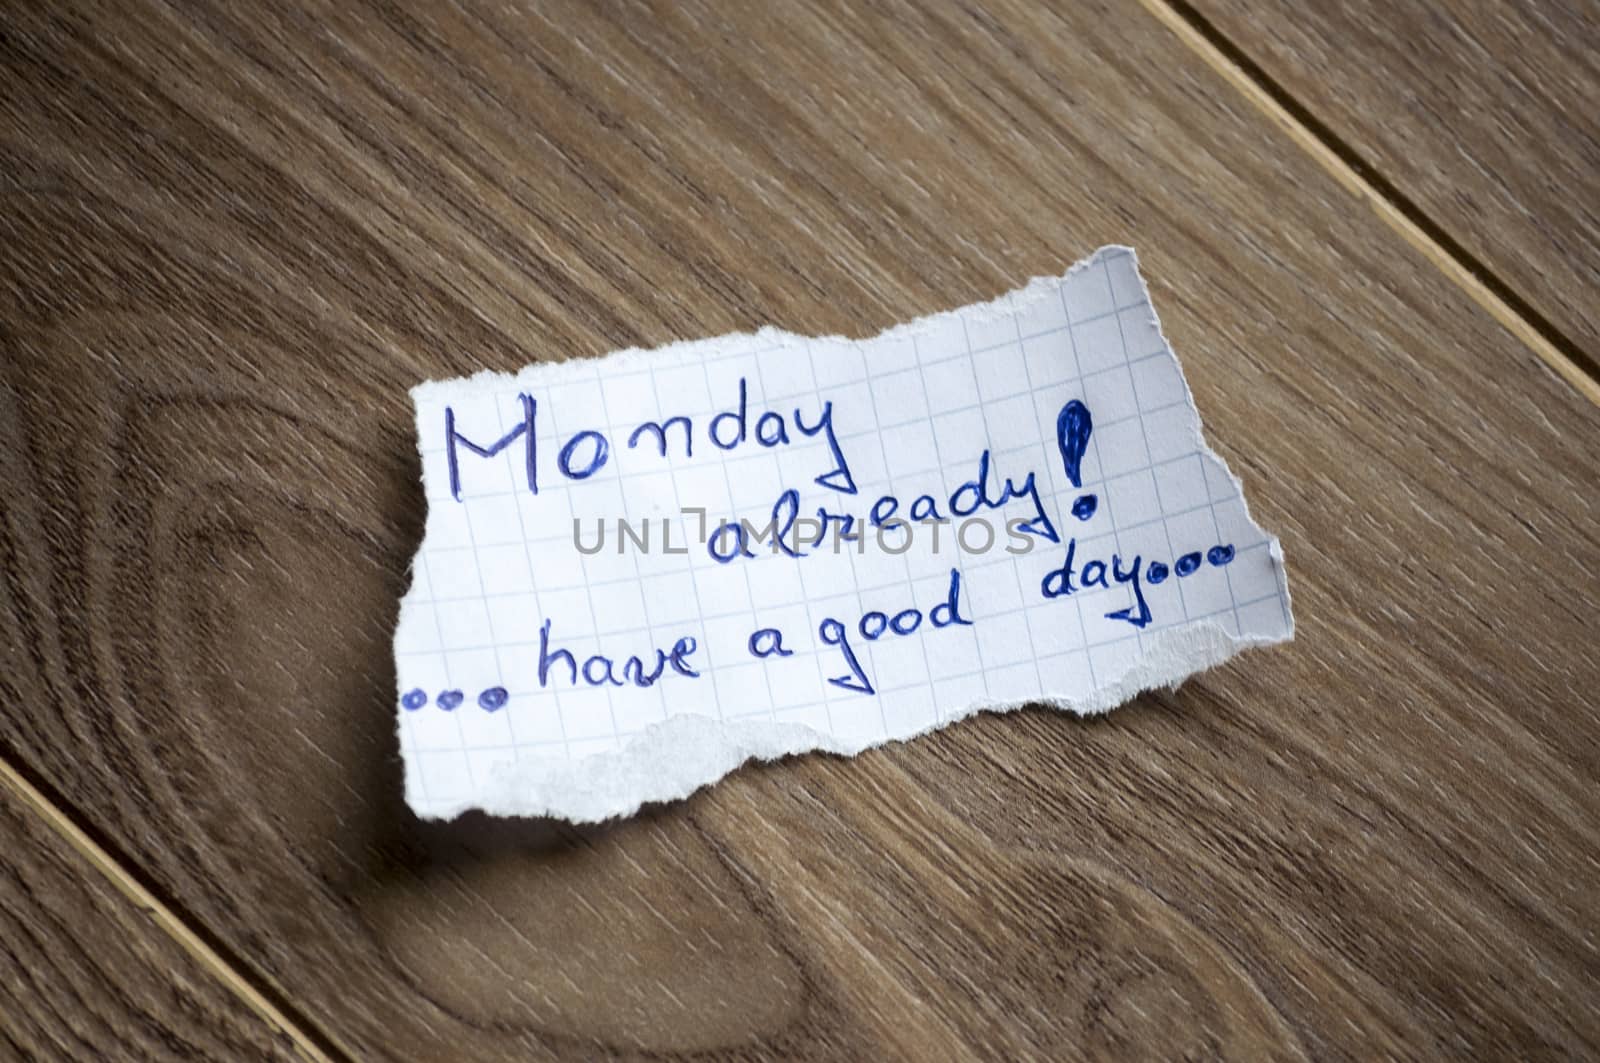 Monday already! have a good day. by maxmitzu